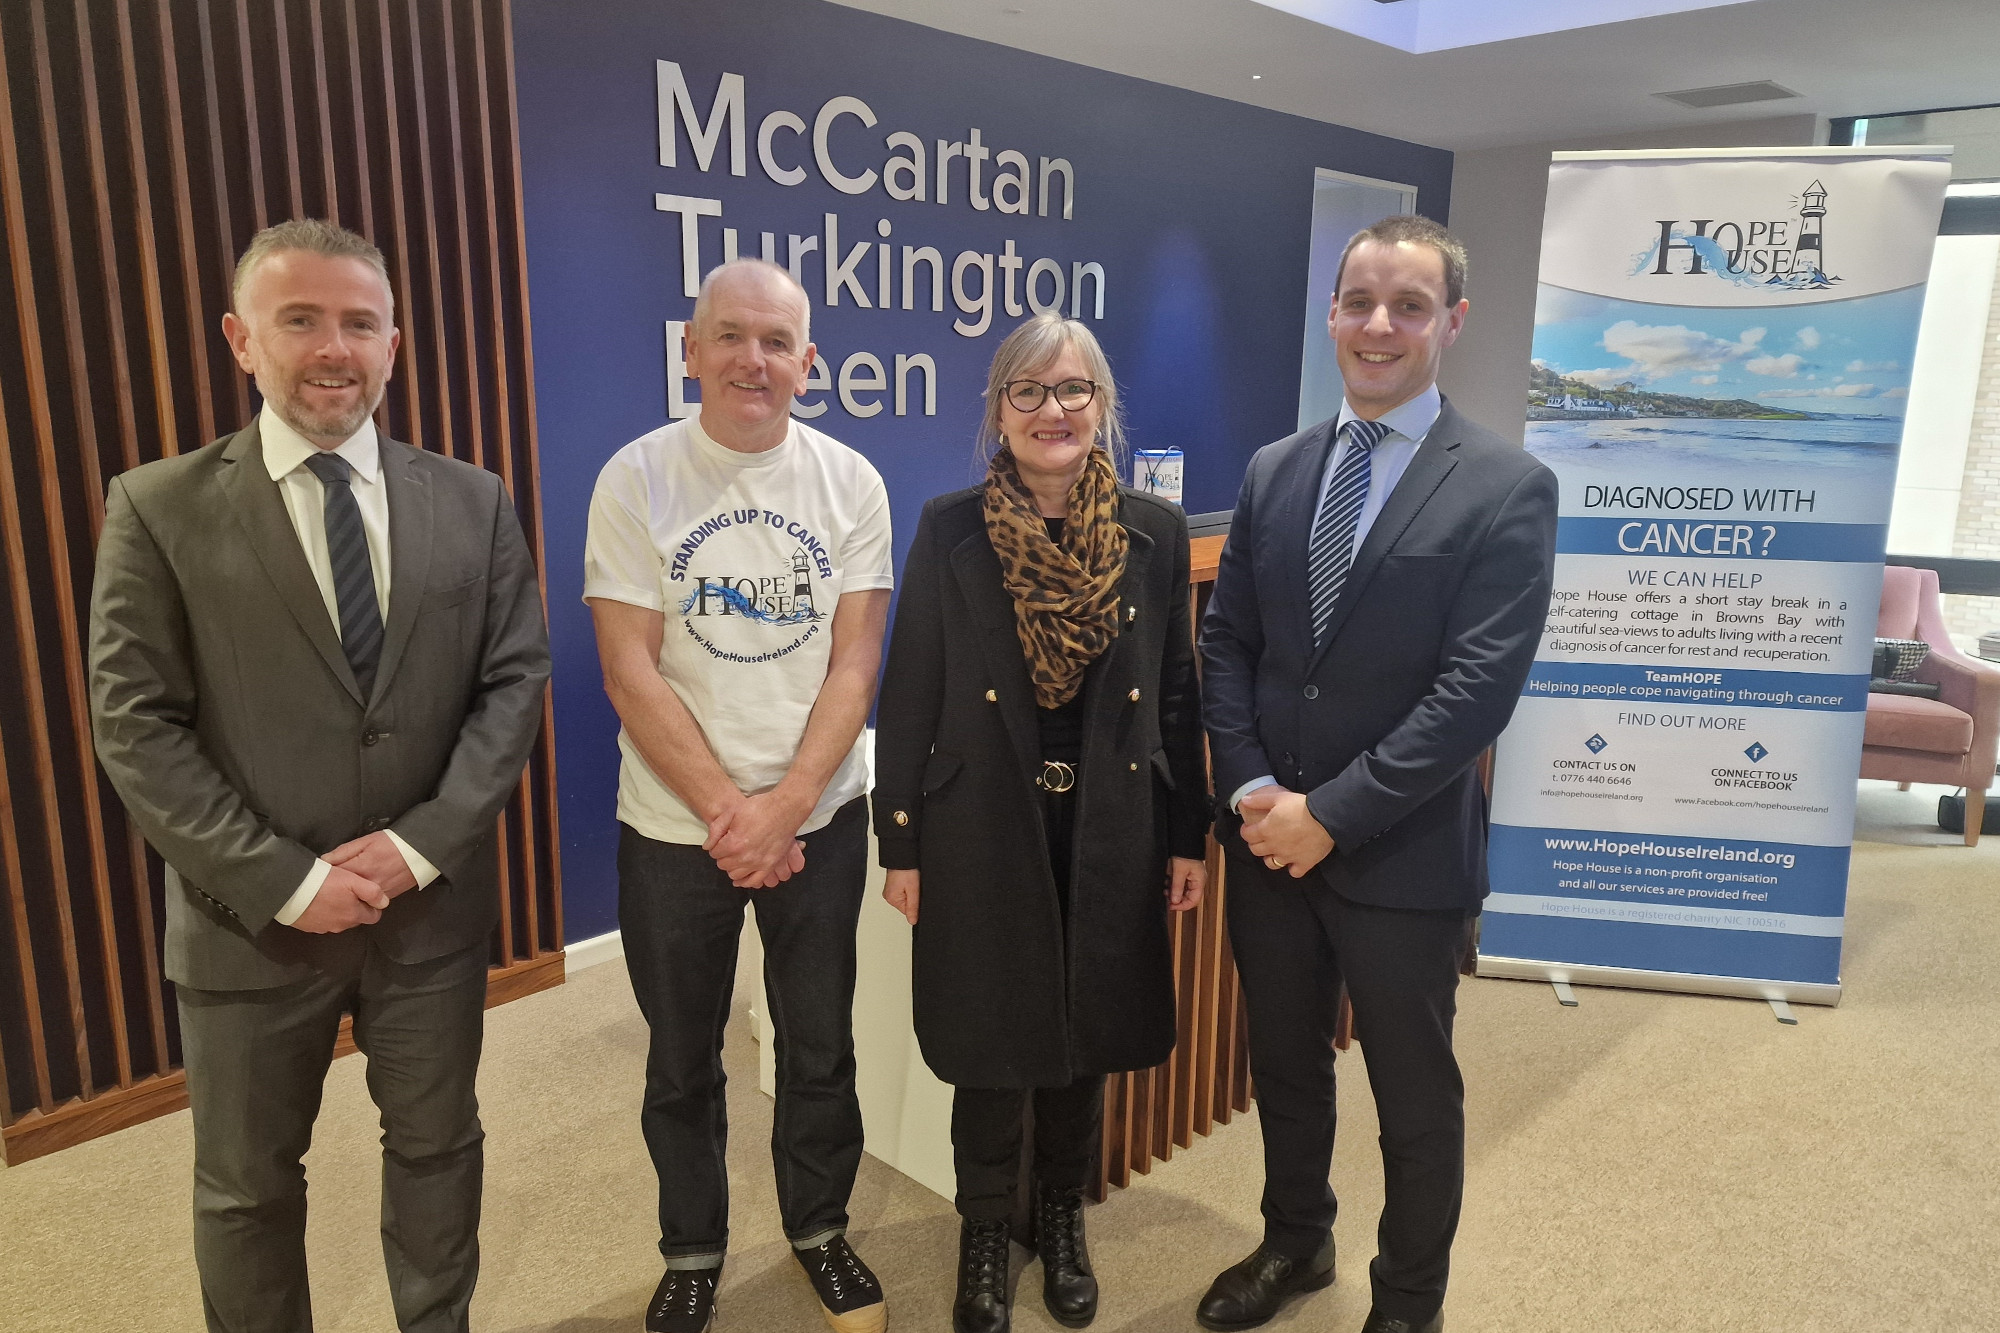 McCartan Turkington Breen partners with Hope House Ireland